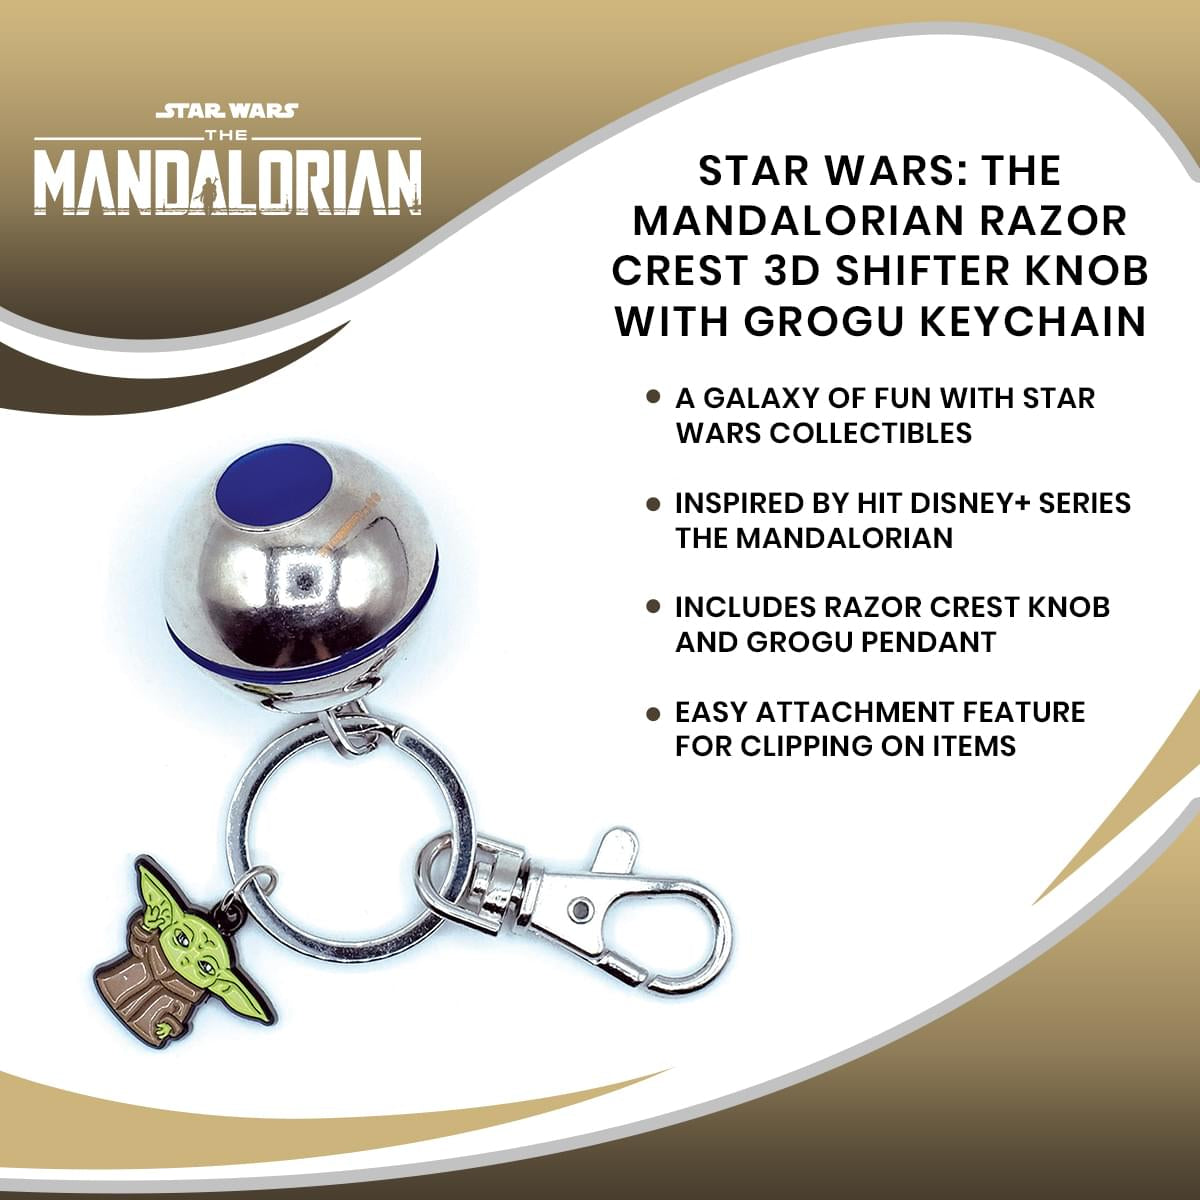 Star Wars: The Mandalorian Razor Crest 3D Shifter Knob with Grogu Keychain